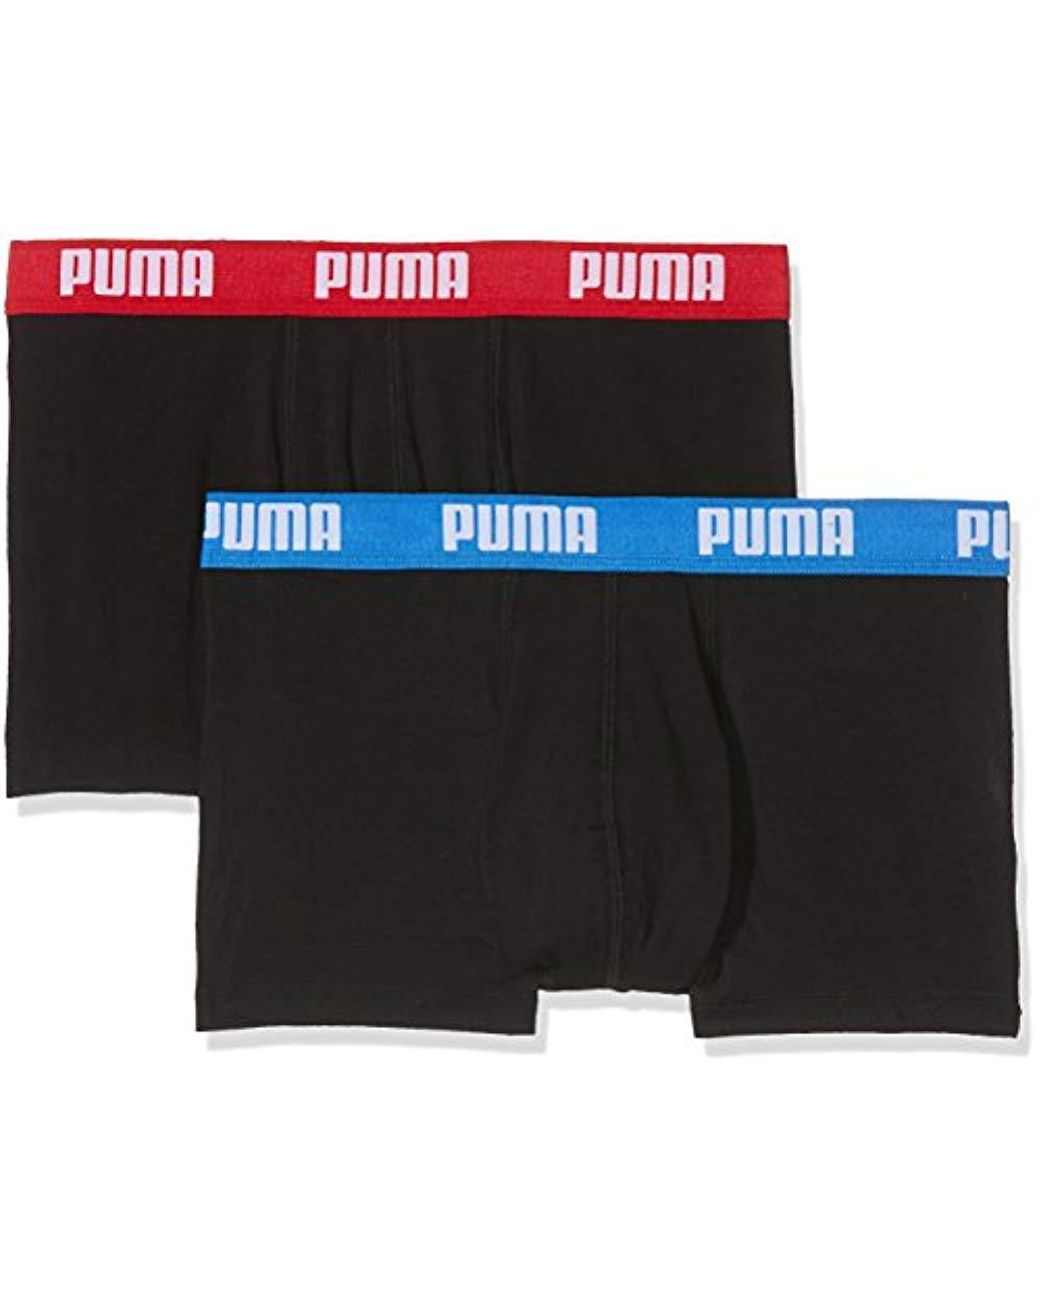 boxer puma pack 3 hombre